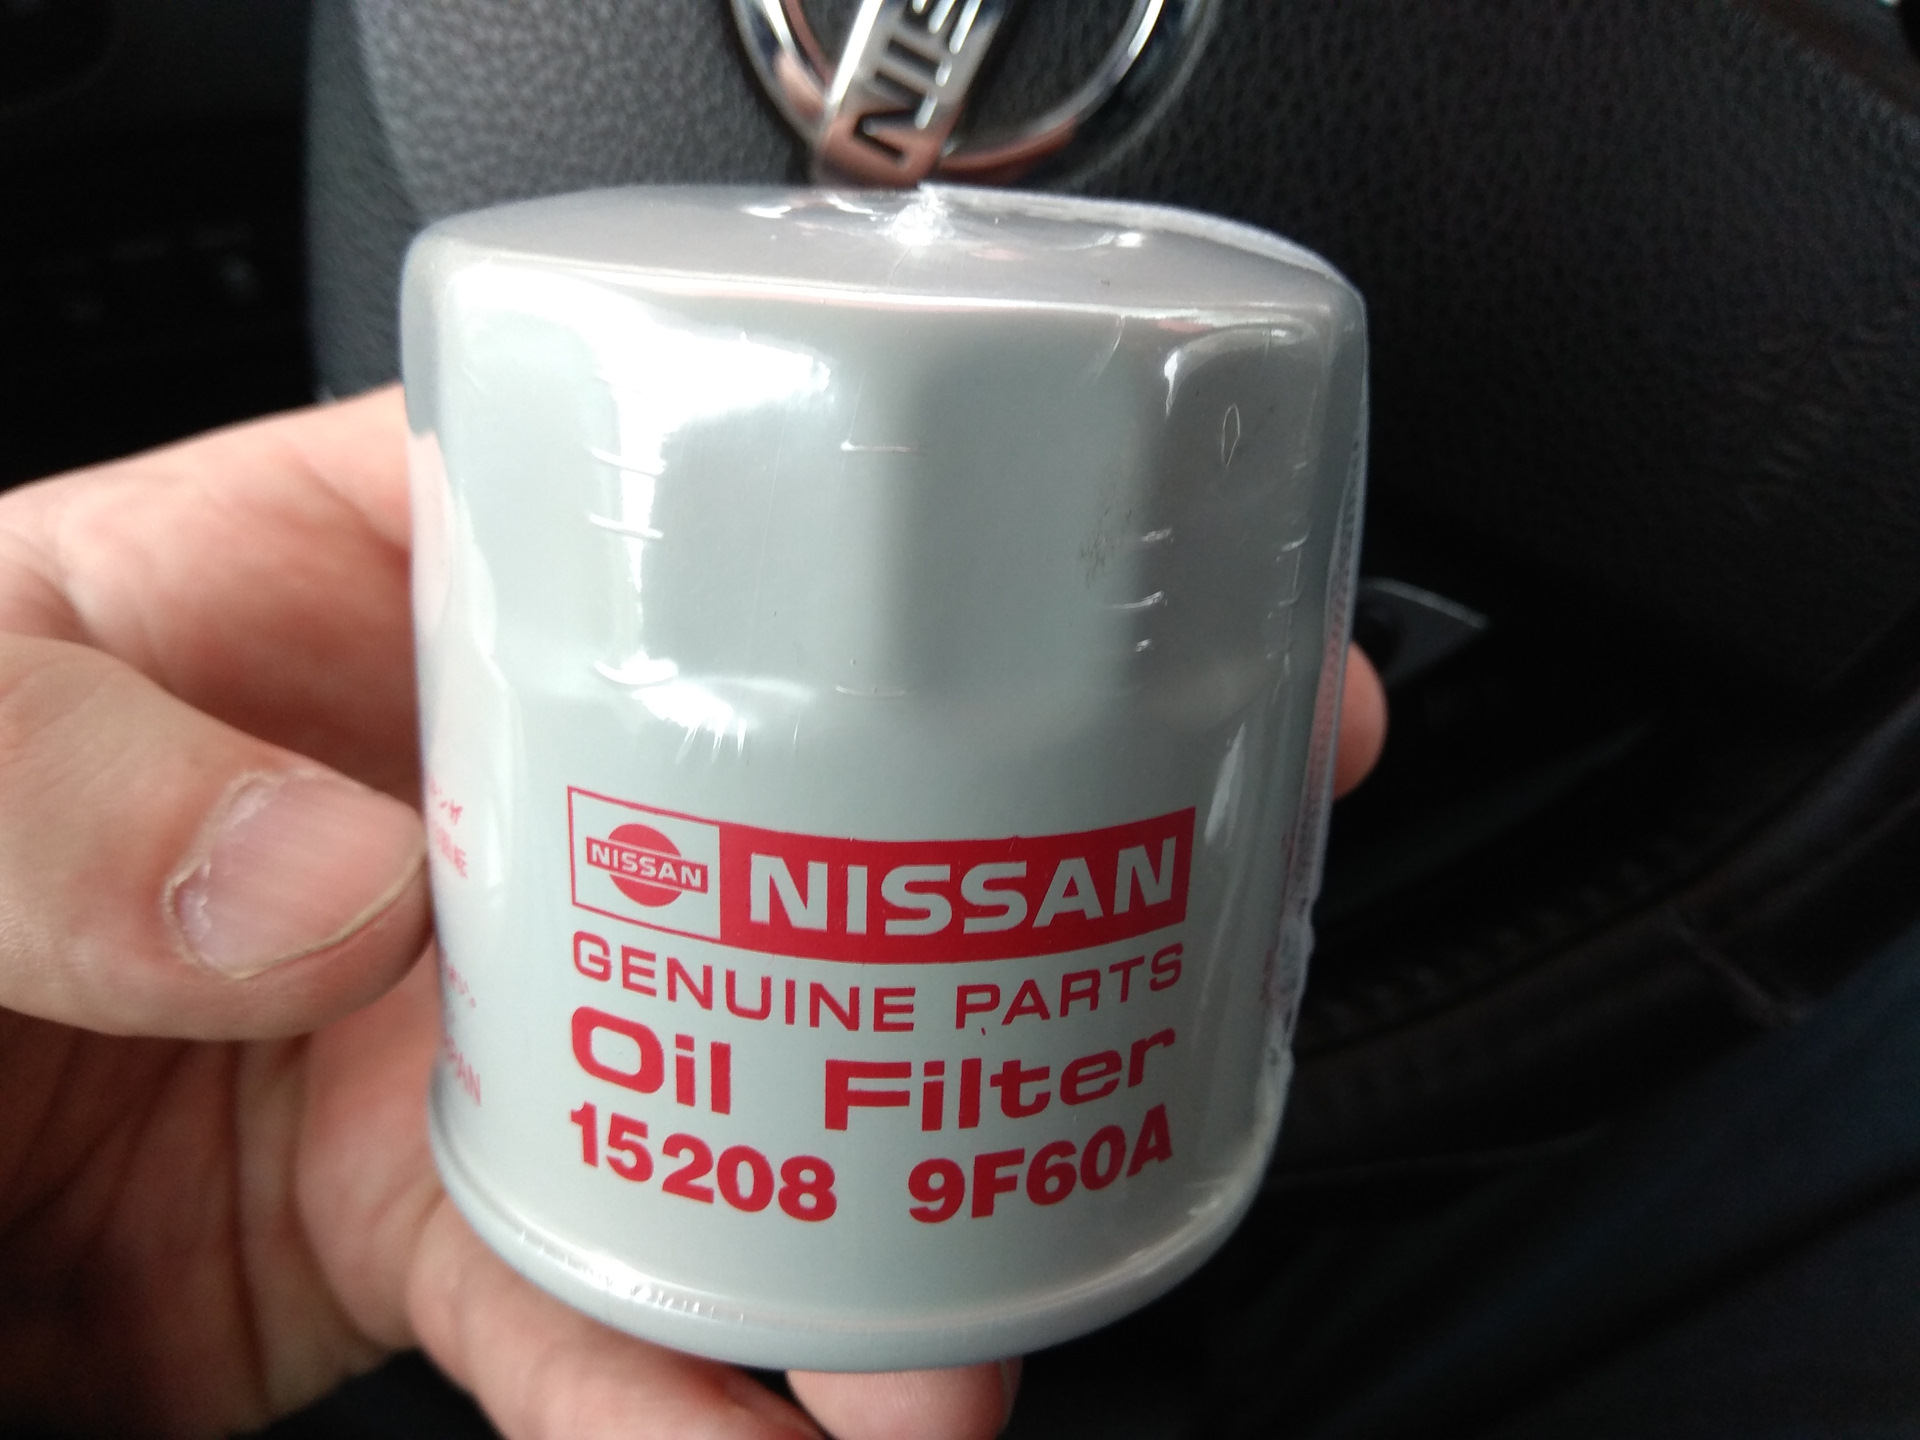 Масляный фильтр Nissan 15208-9f60a. Теана 2.5 масляный фильтр. W67/1 фильтр масляный. Теана 2.5 v6 фильтр масляный артикул.